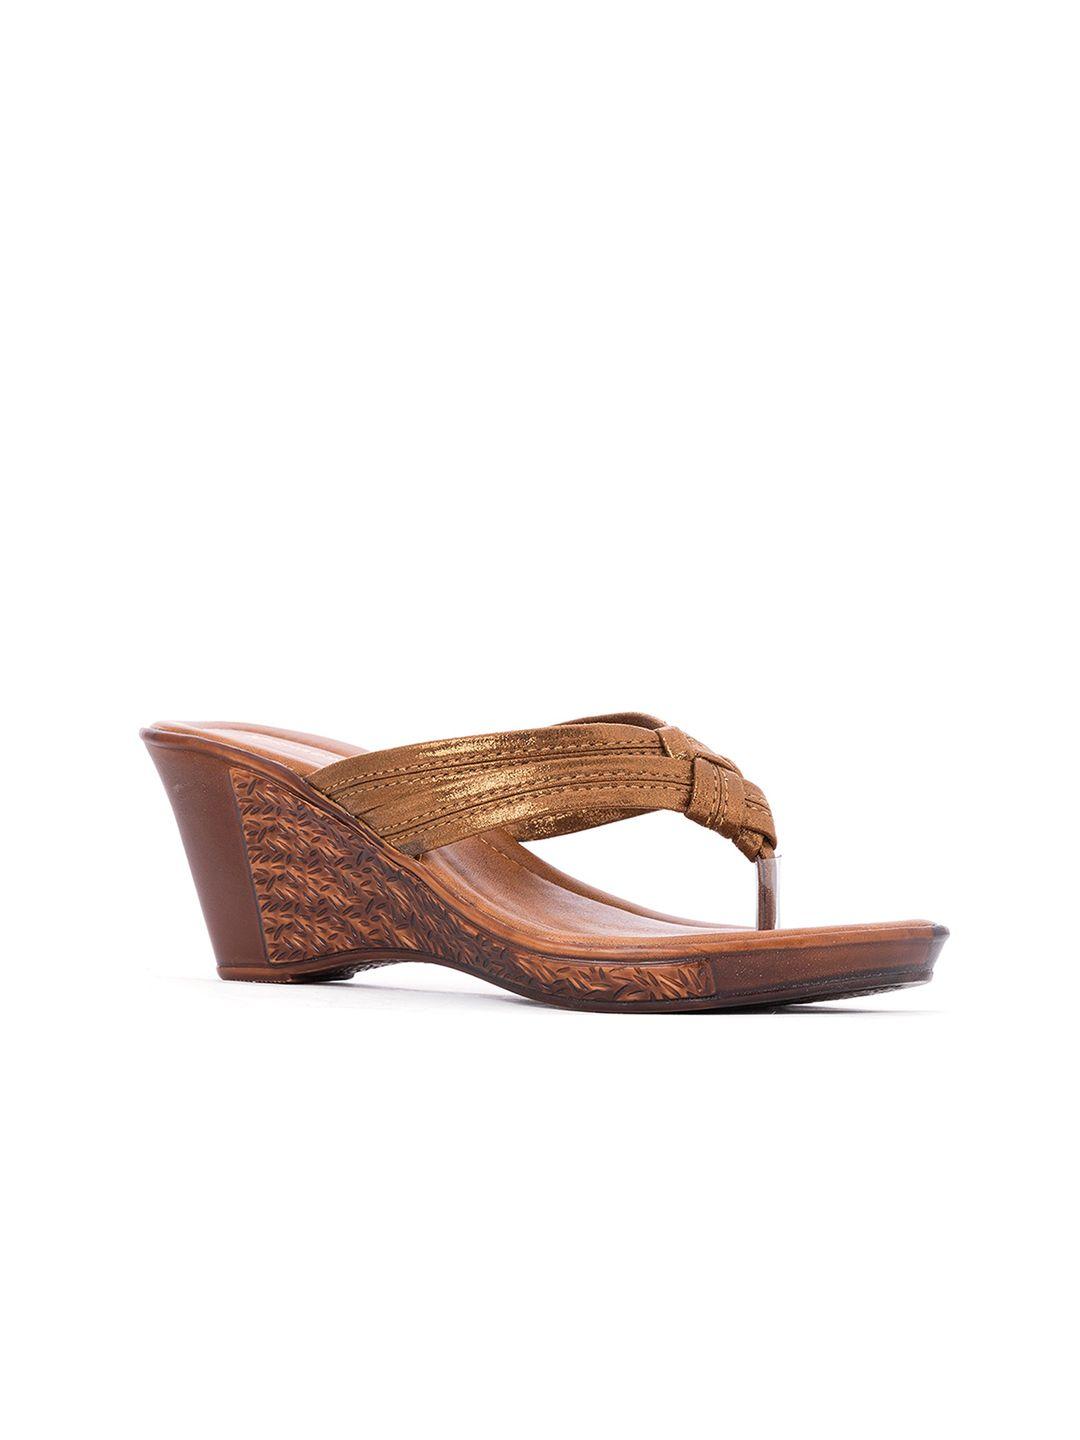 khadims brown wedge sandals